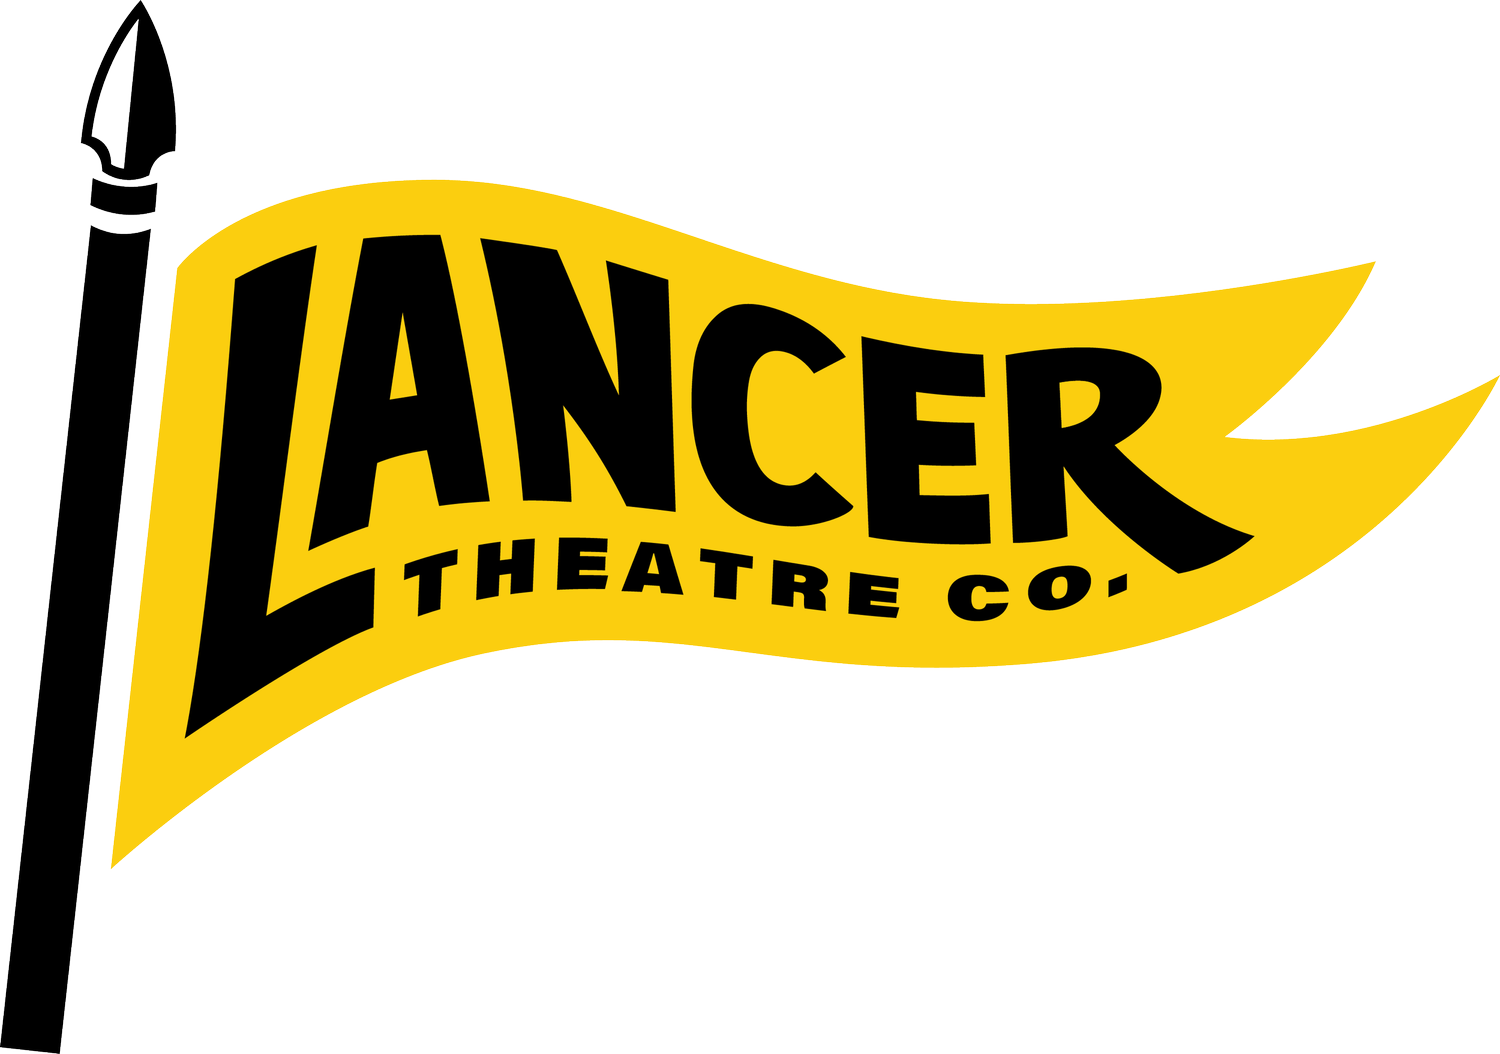 Lancer Theatre Co.